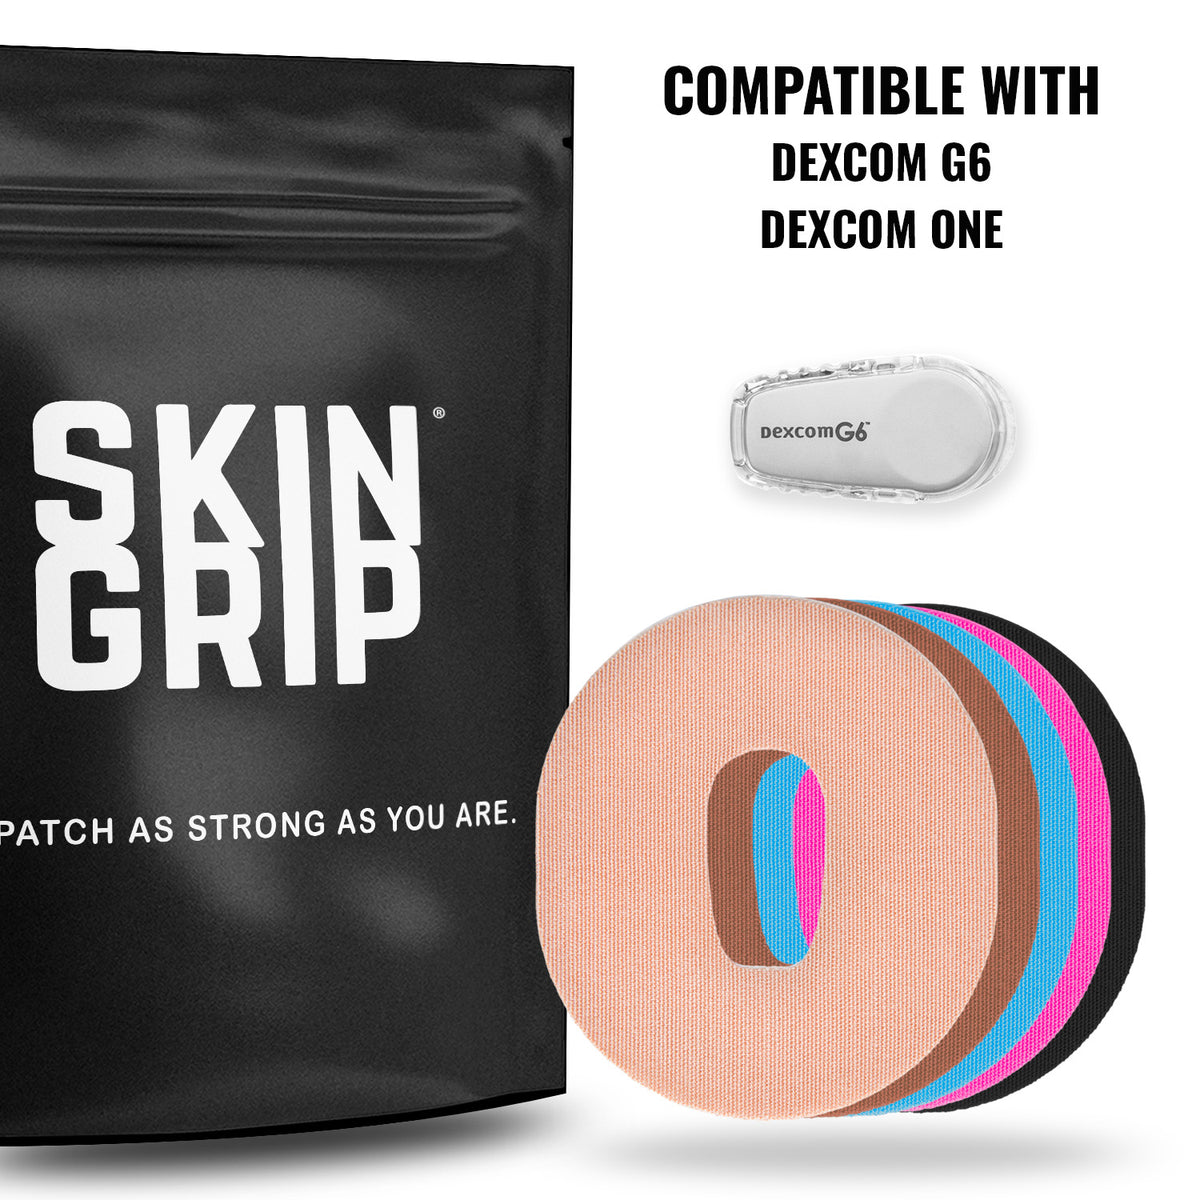 How to Apply the Dexcom G6 Patch - Skin Grip 